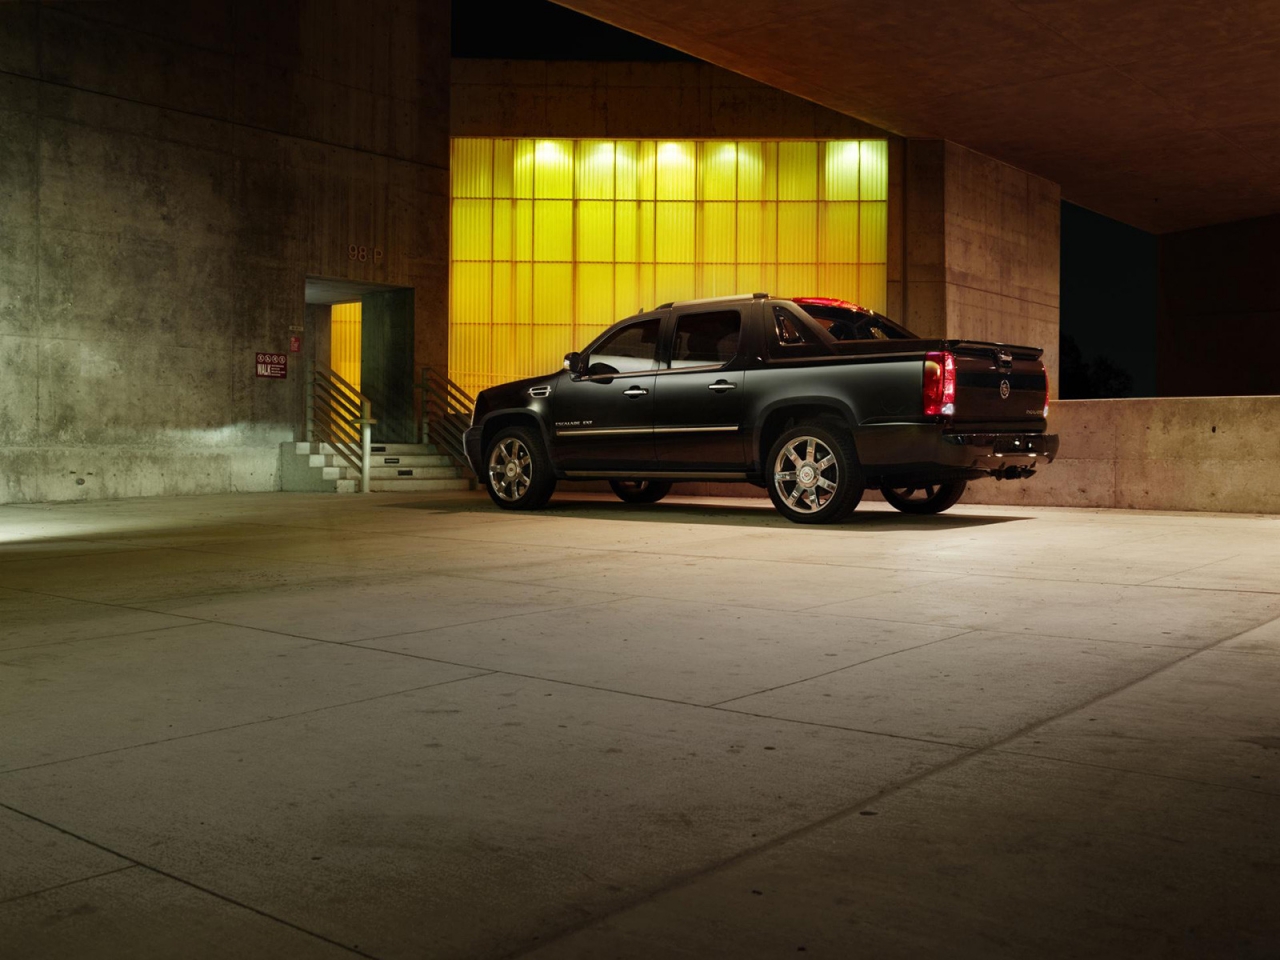 2013 Cadillac Escalade for 1280 x 960 resolution